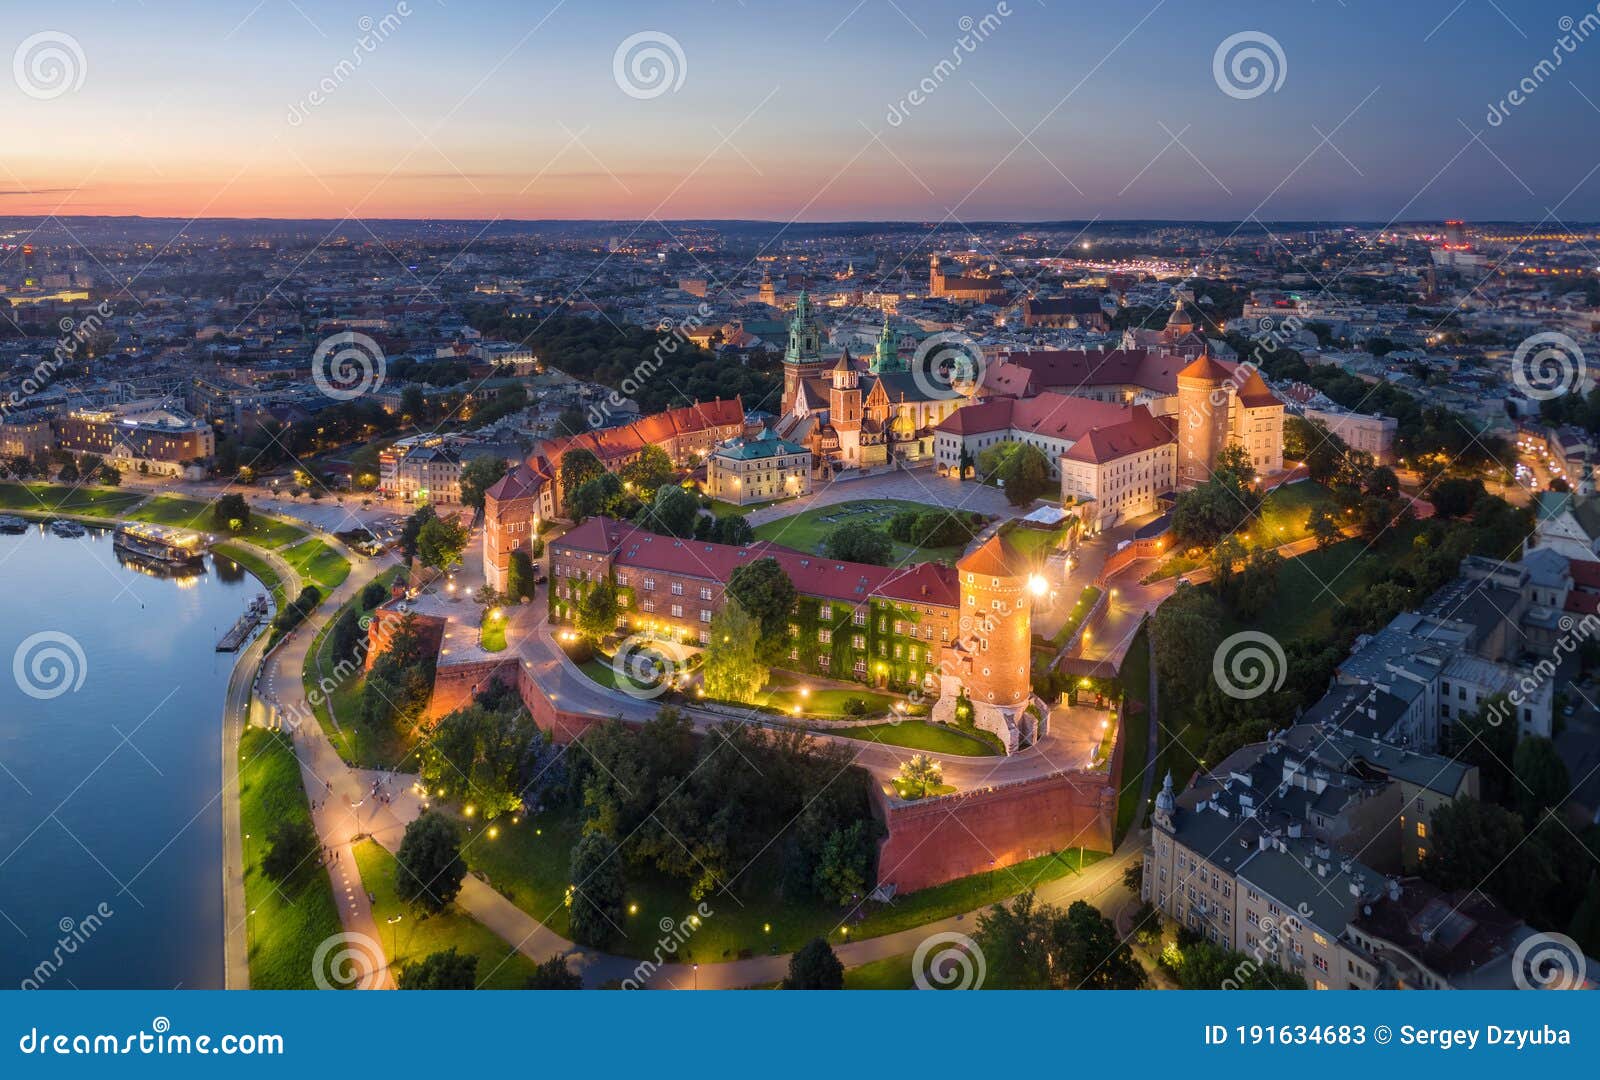 aerial view of wawel castle in krakow, poland